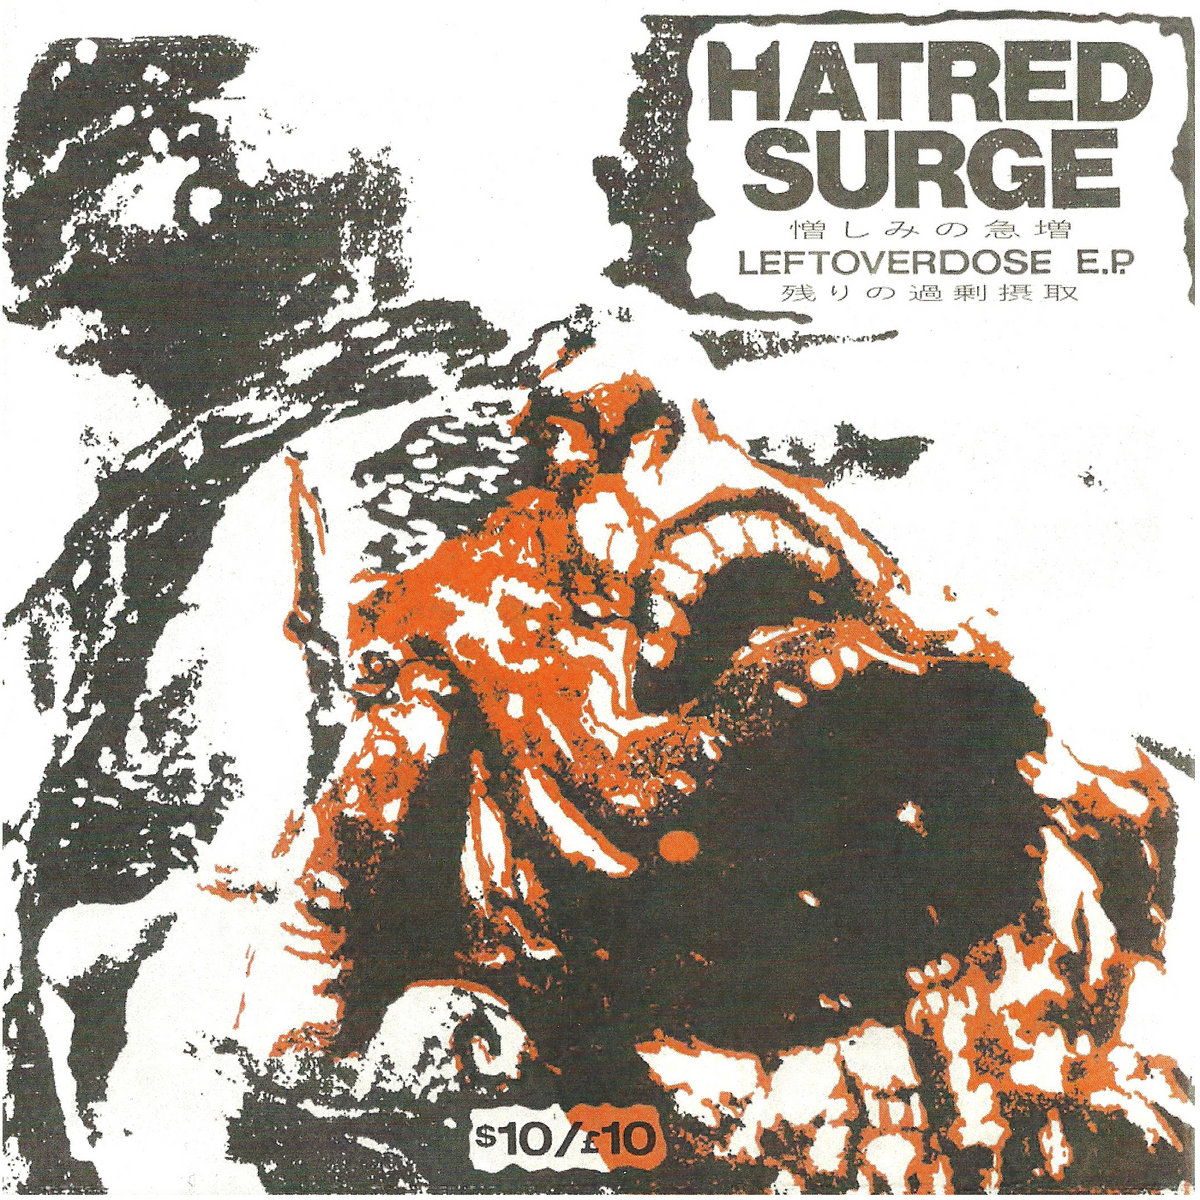 Hatred Surge - Leftoverdose 7" flexi